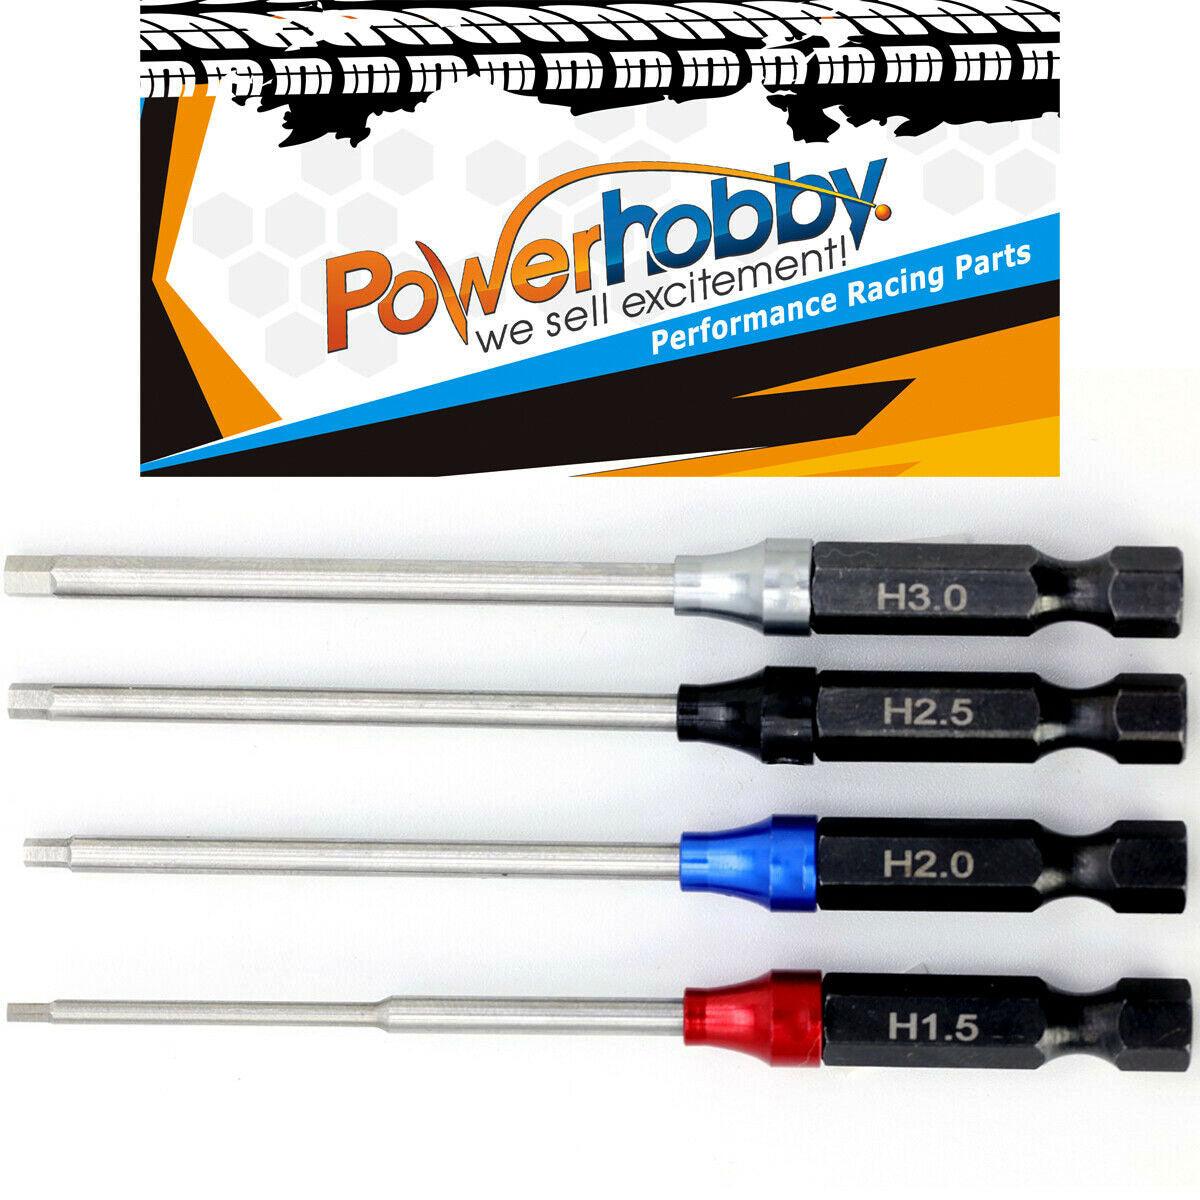 Powerhobby RC Hex Driver 1/4" Power Tool Set Metric 1.5, 2.0, 2.5, 3.0mm - PowerHobby